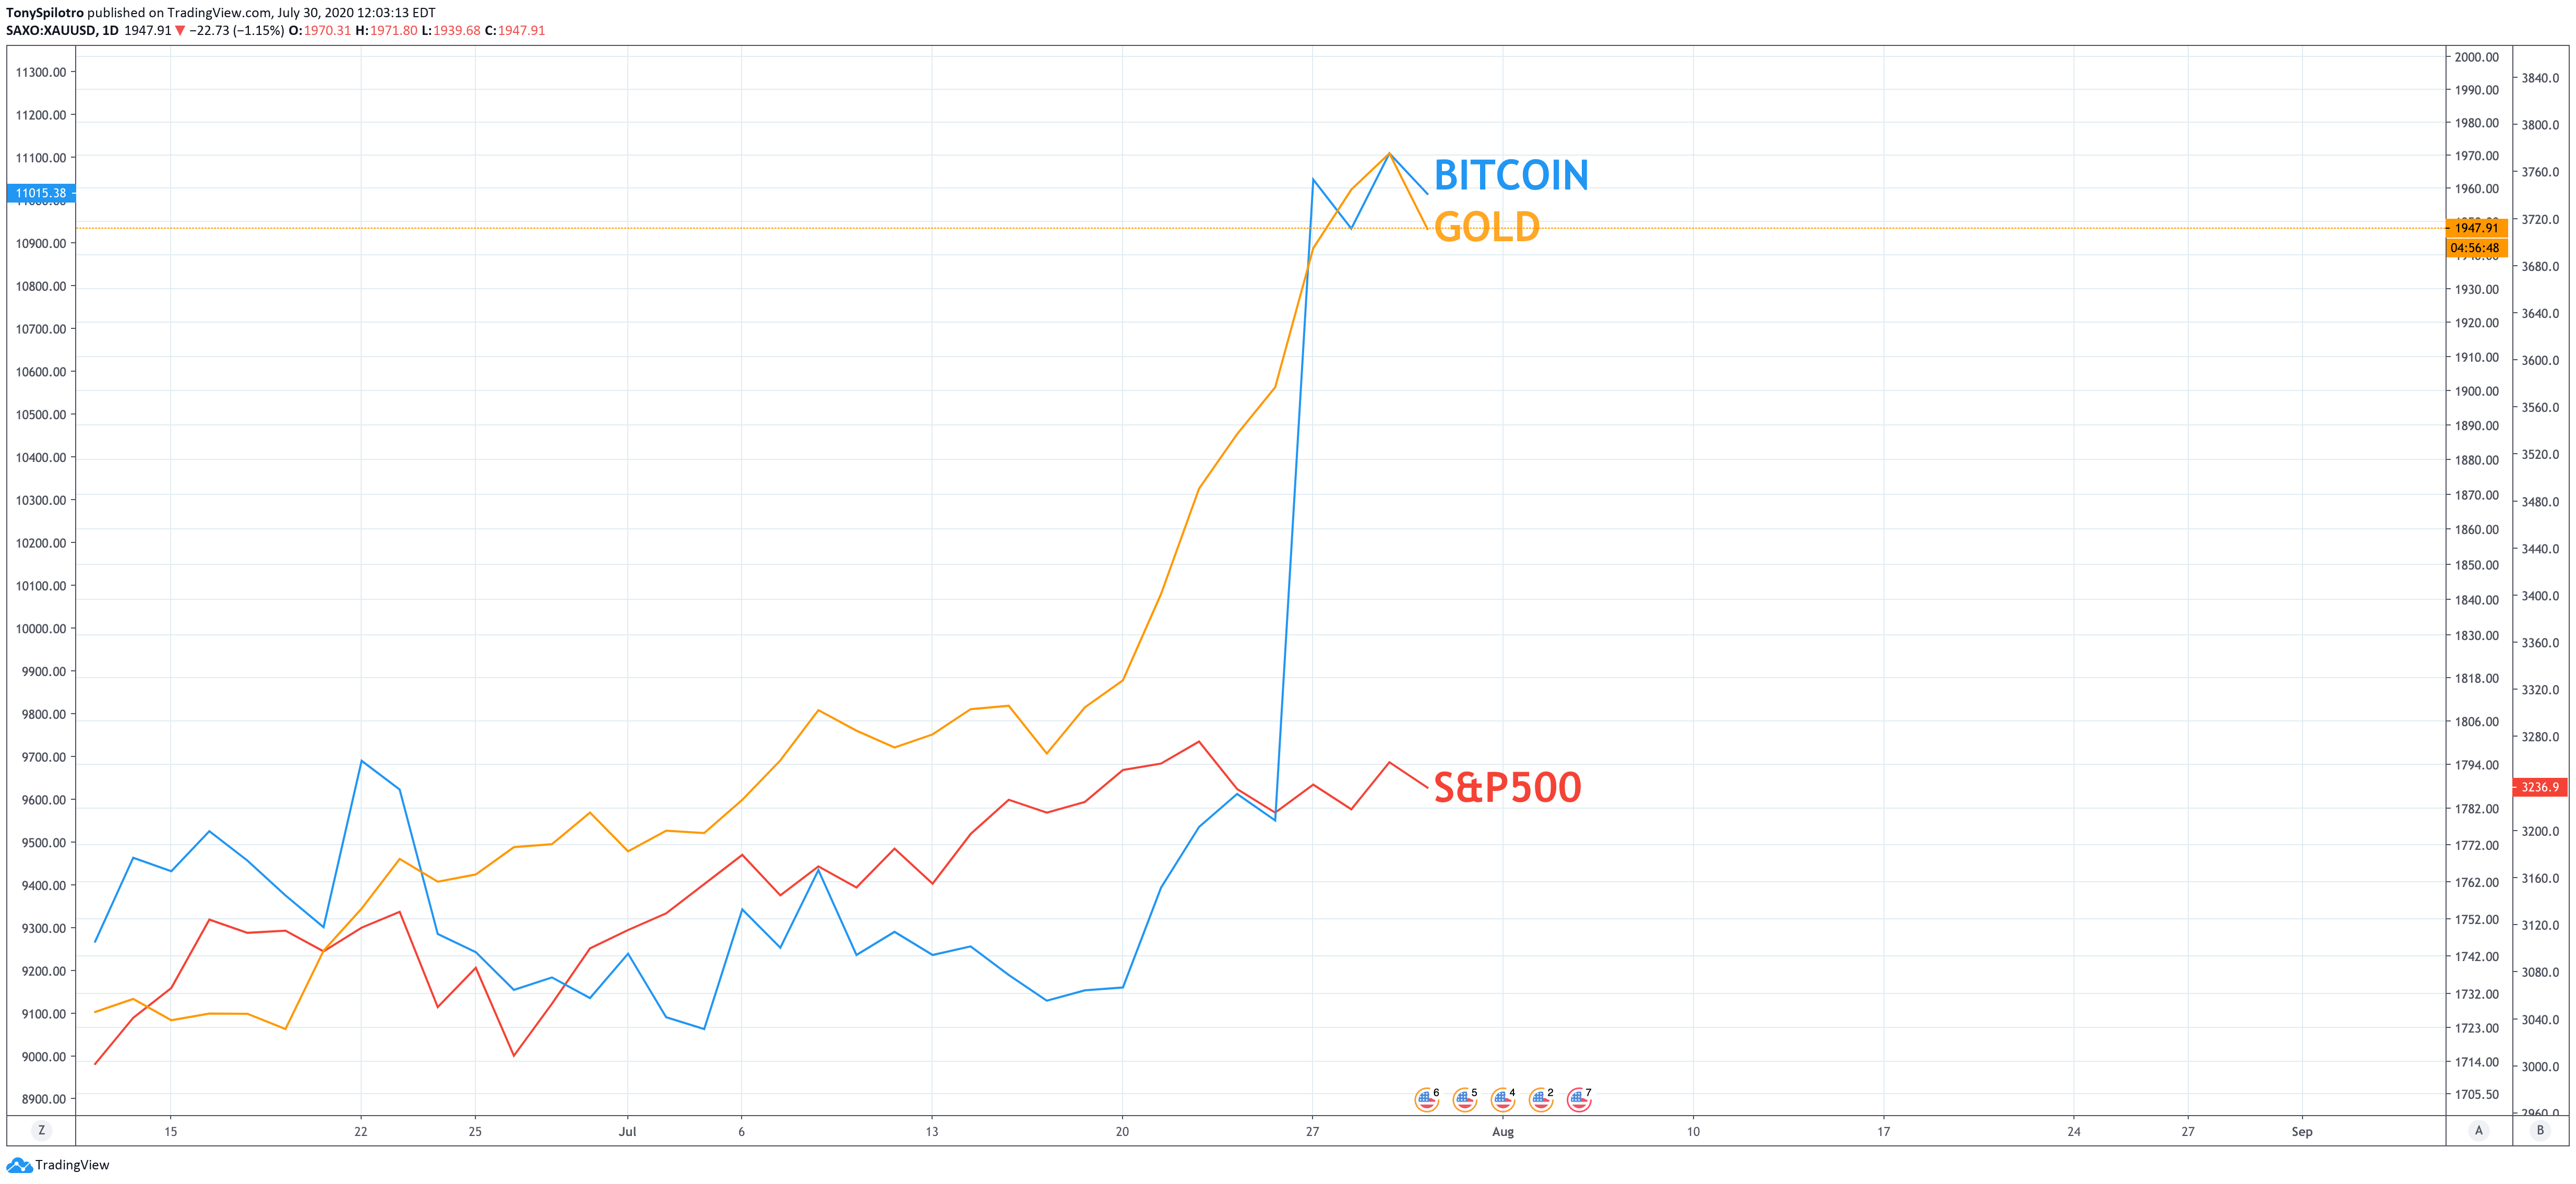 bitcoin gold stock market correlation sp500 spx